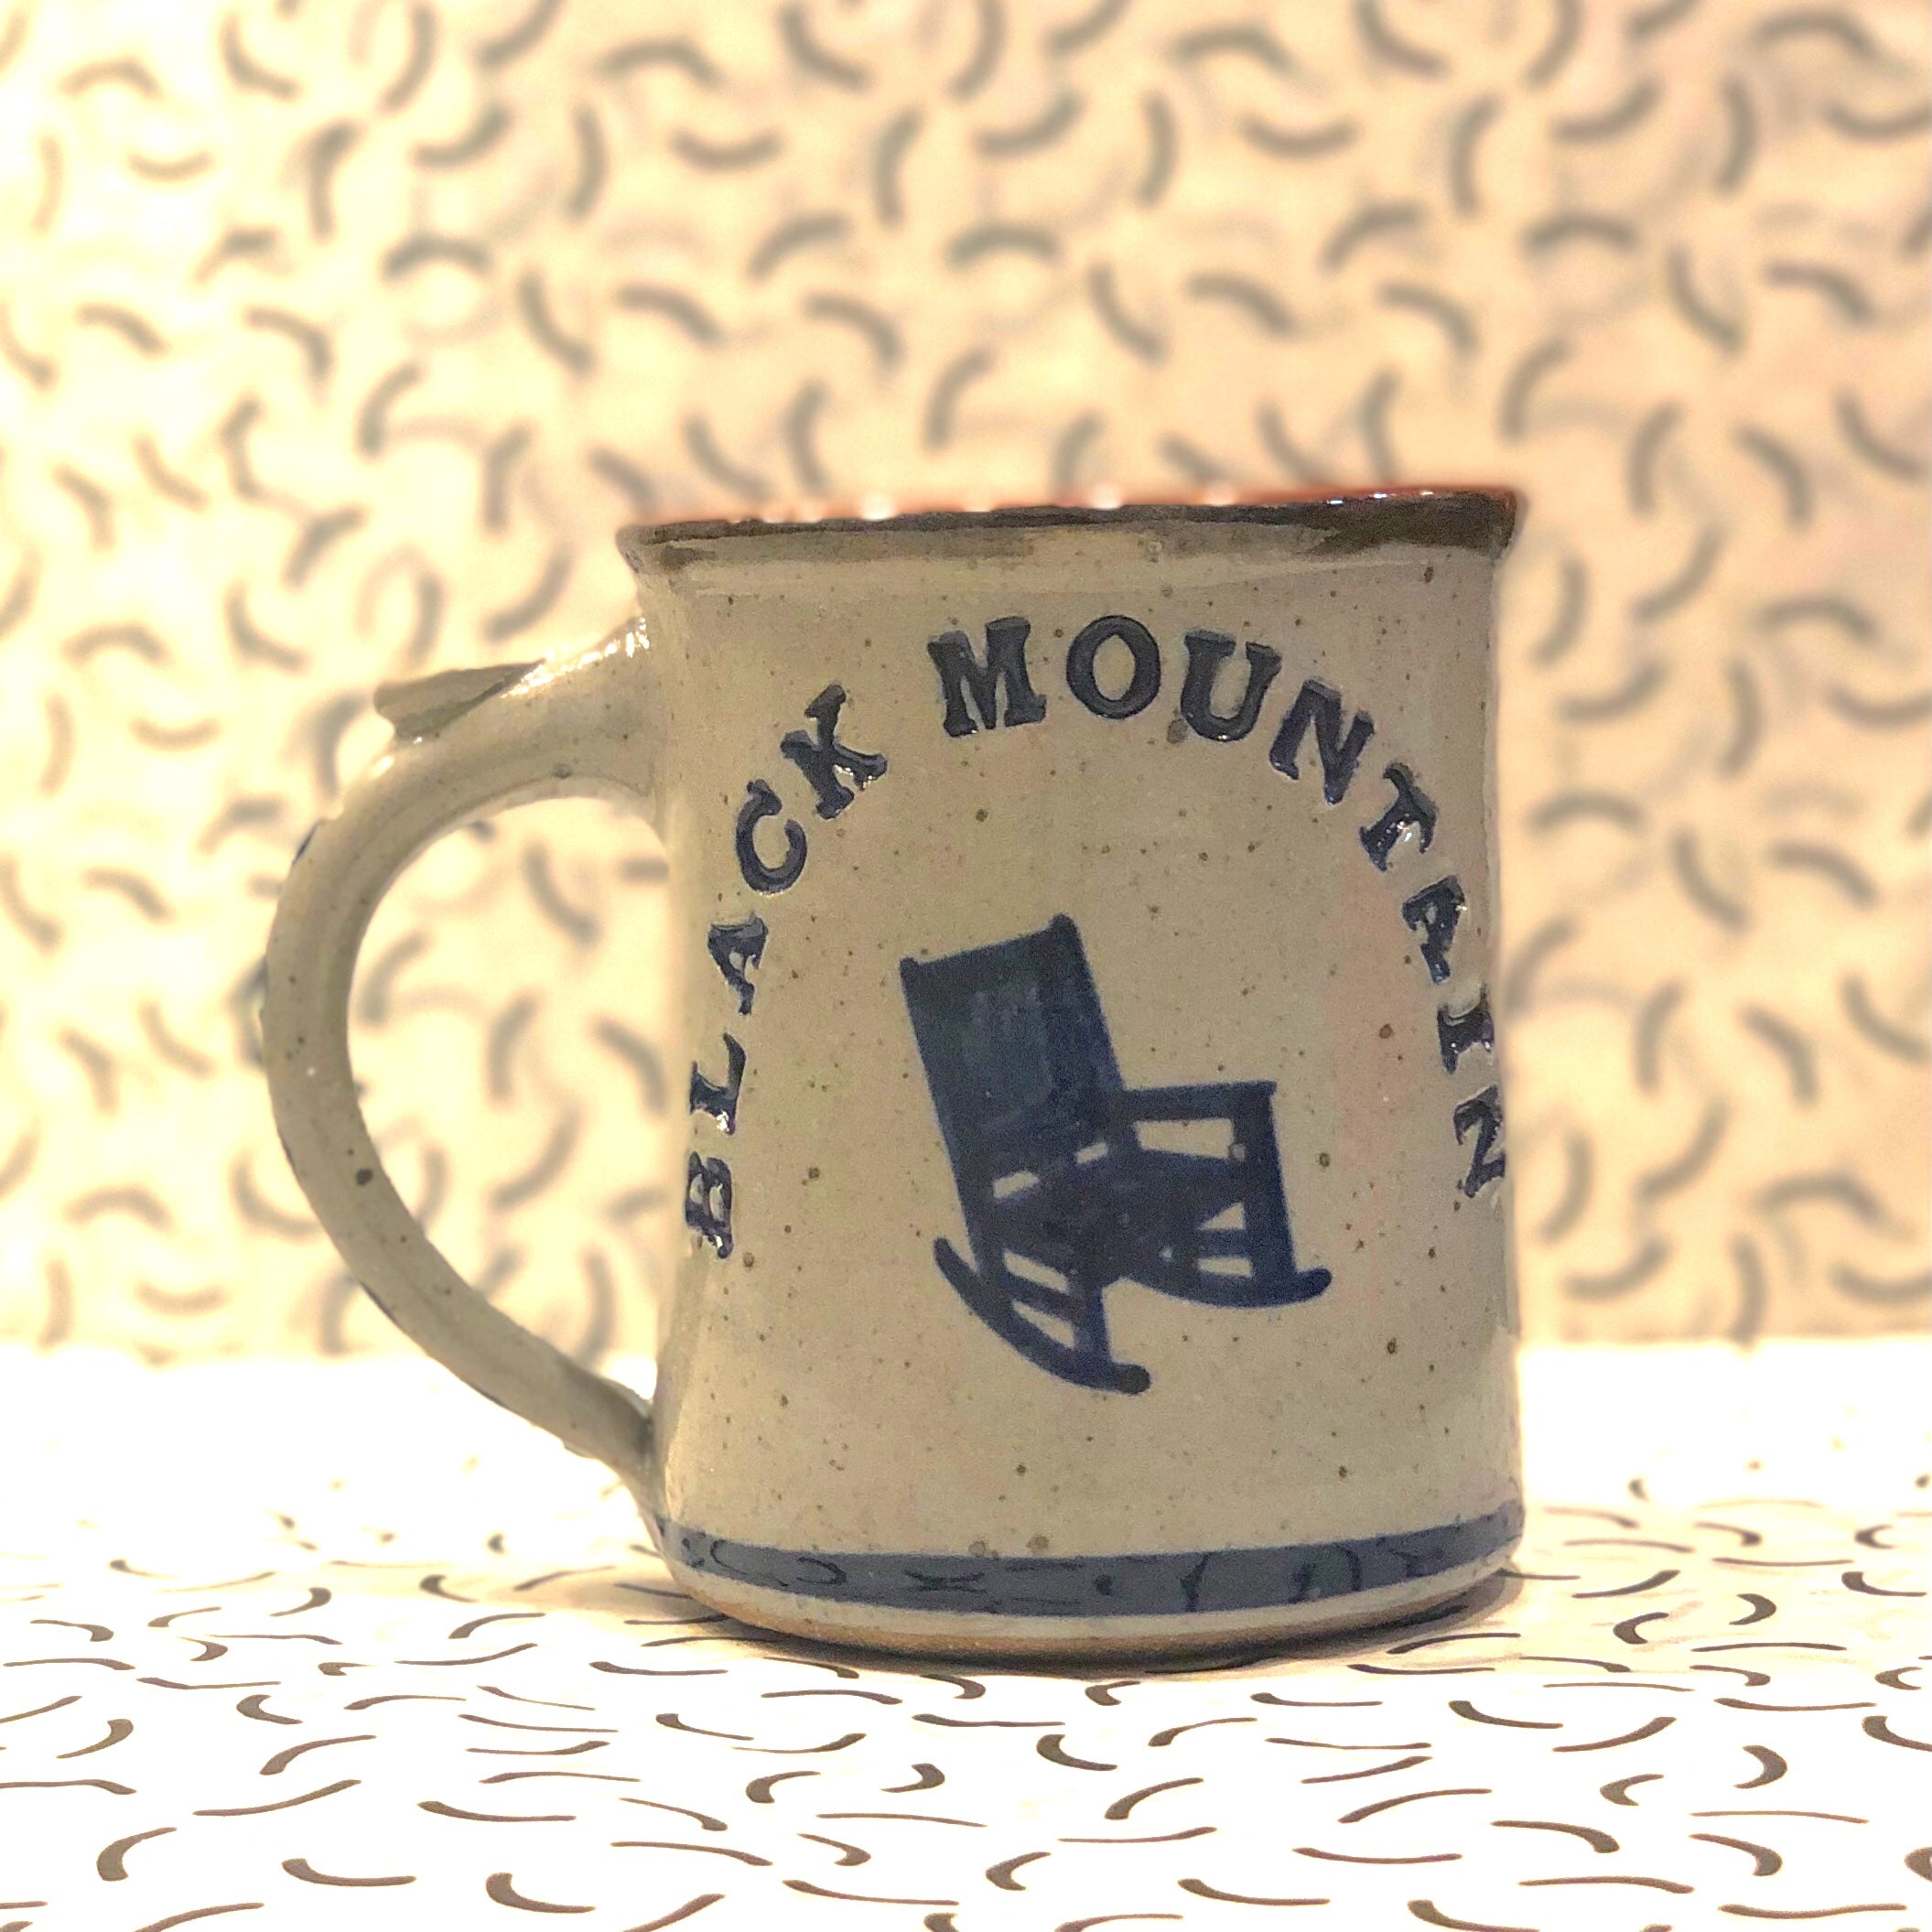 Flat Mountain Farm Black Coffee Mug — Flat Mountain Farm